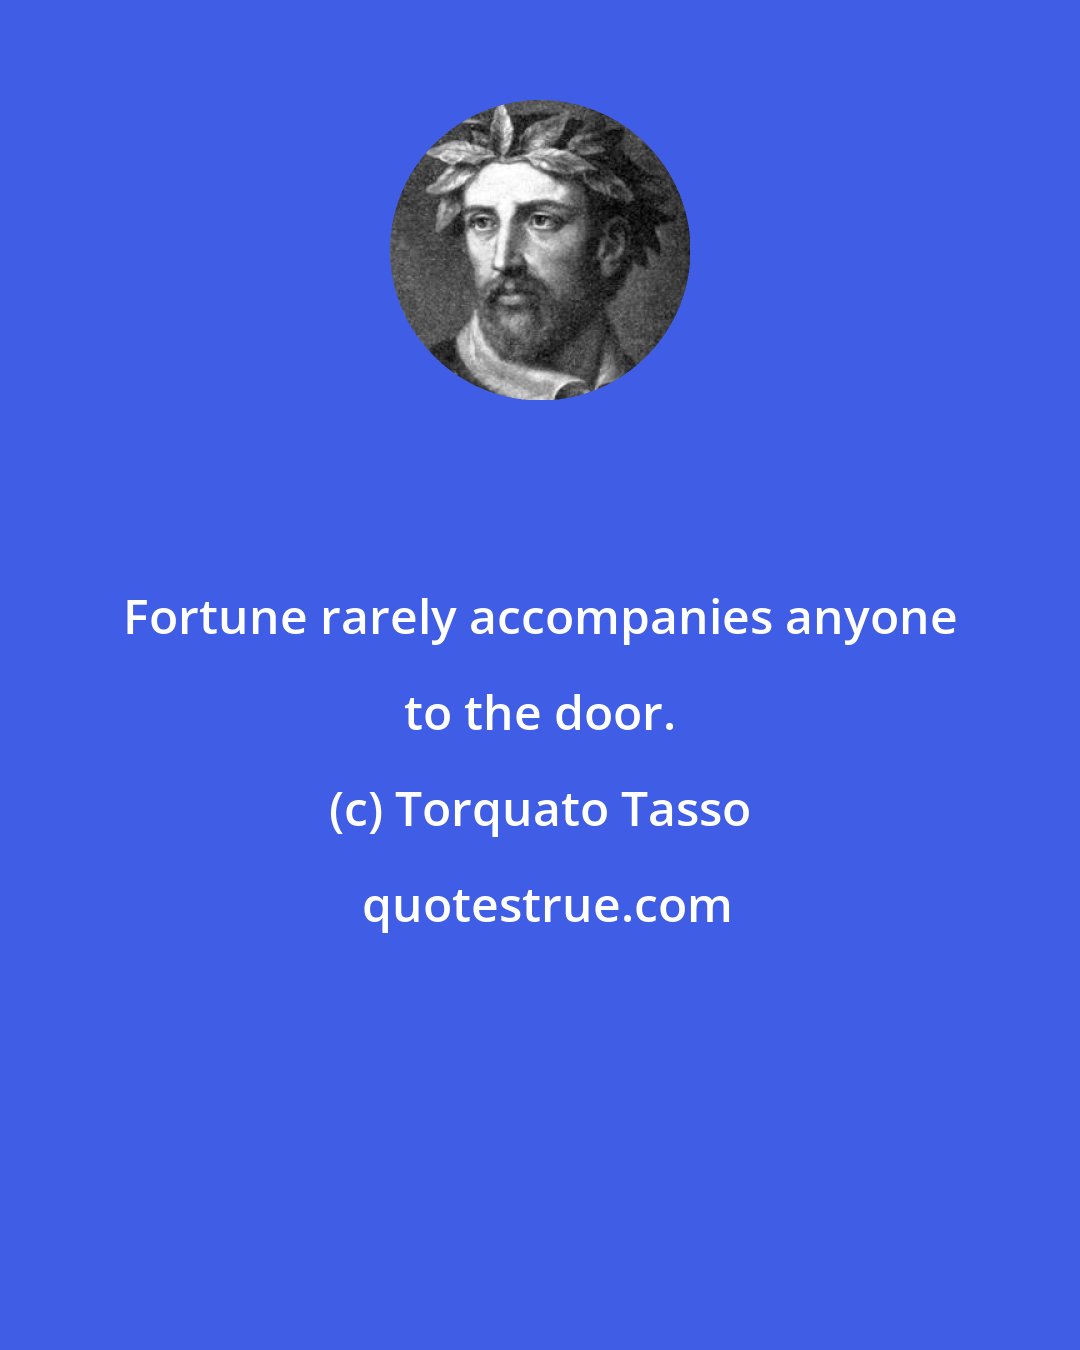 Torquato Tasso: Fortune rarely accompanies anyone to the door.